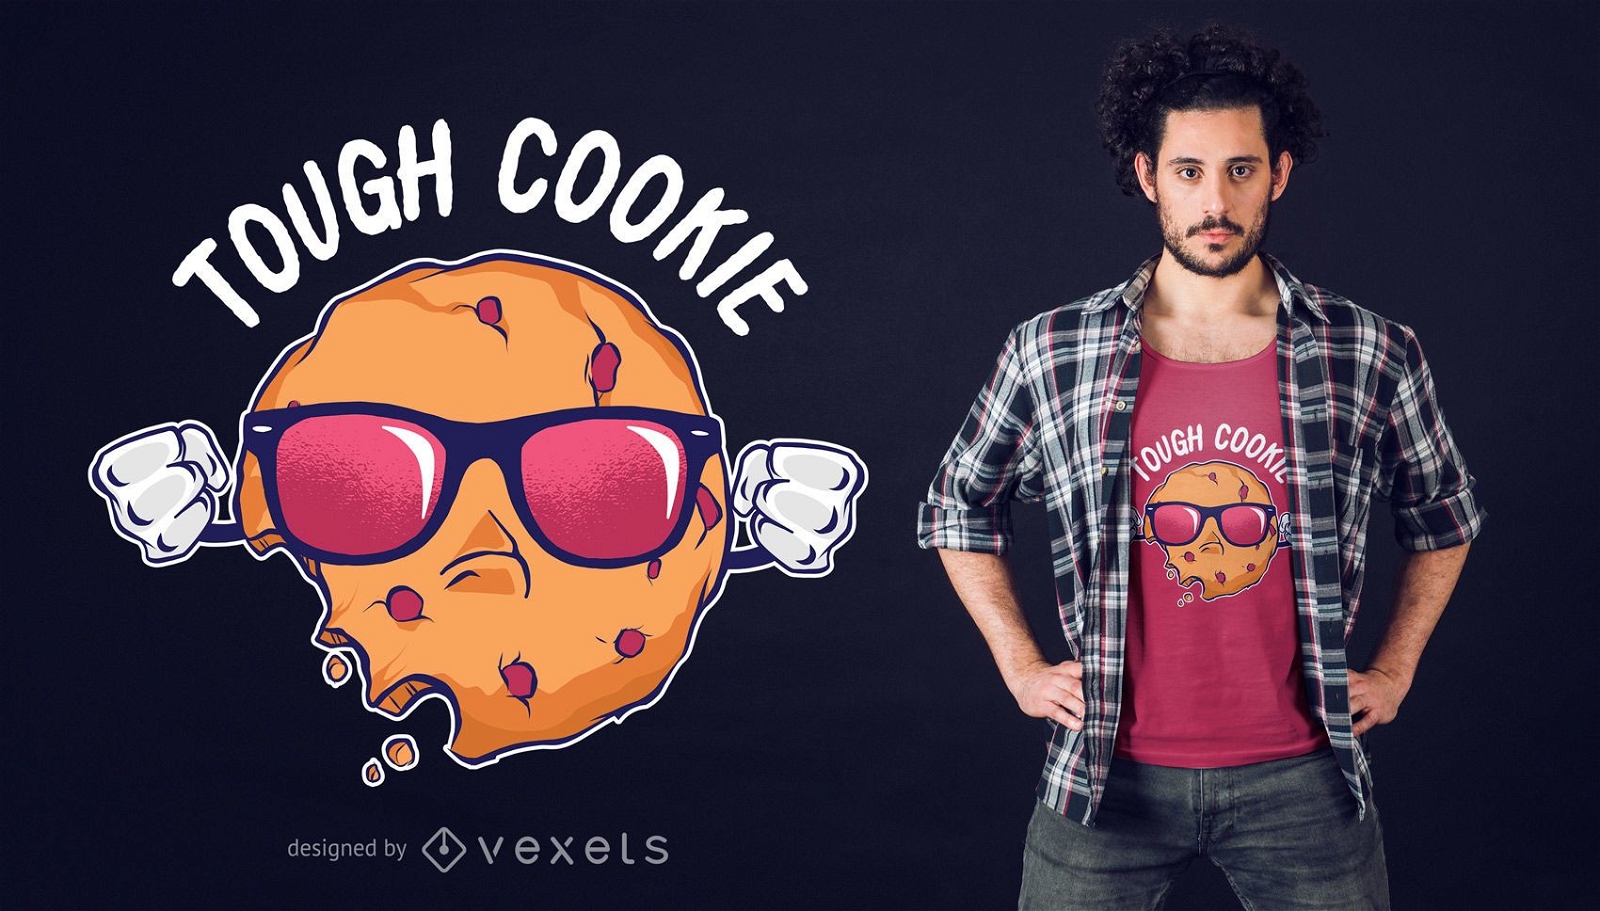 Cool cookie t-shirt design